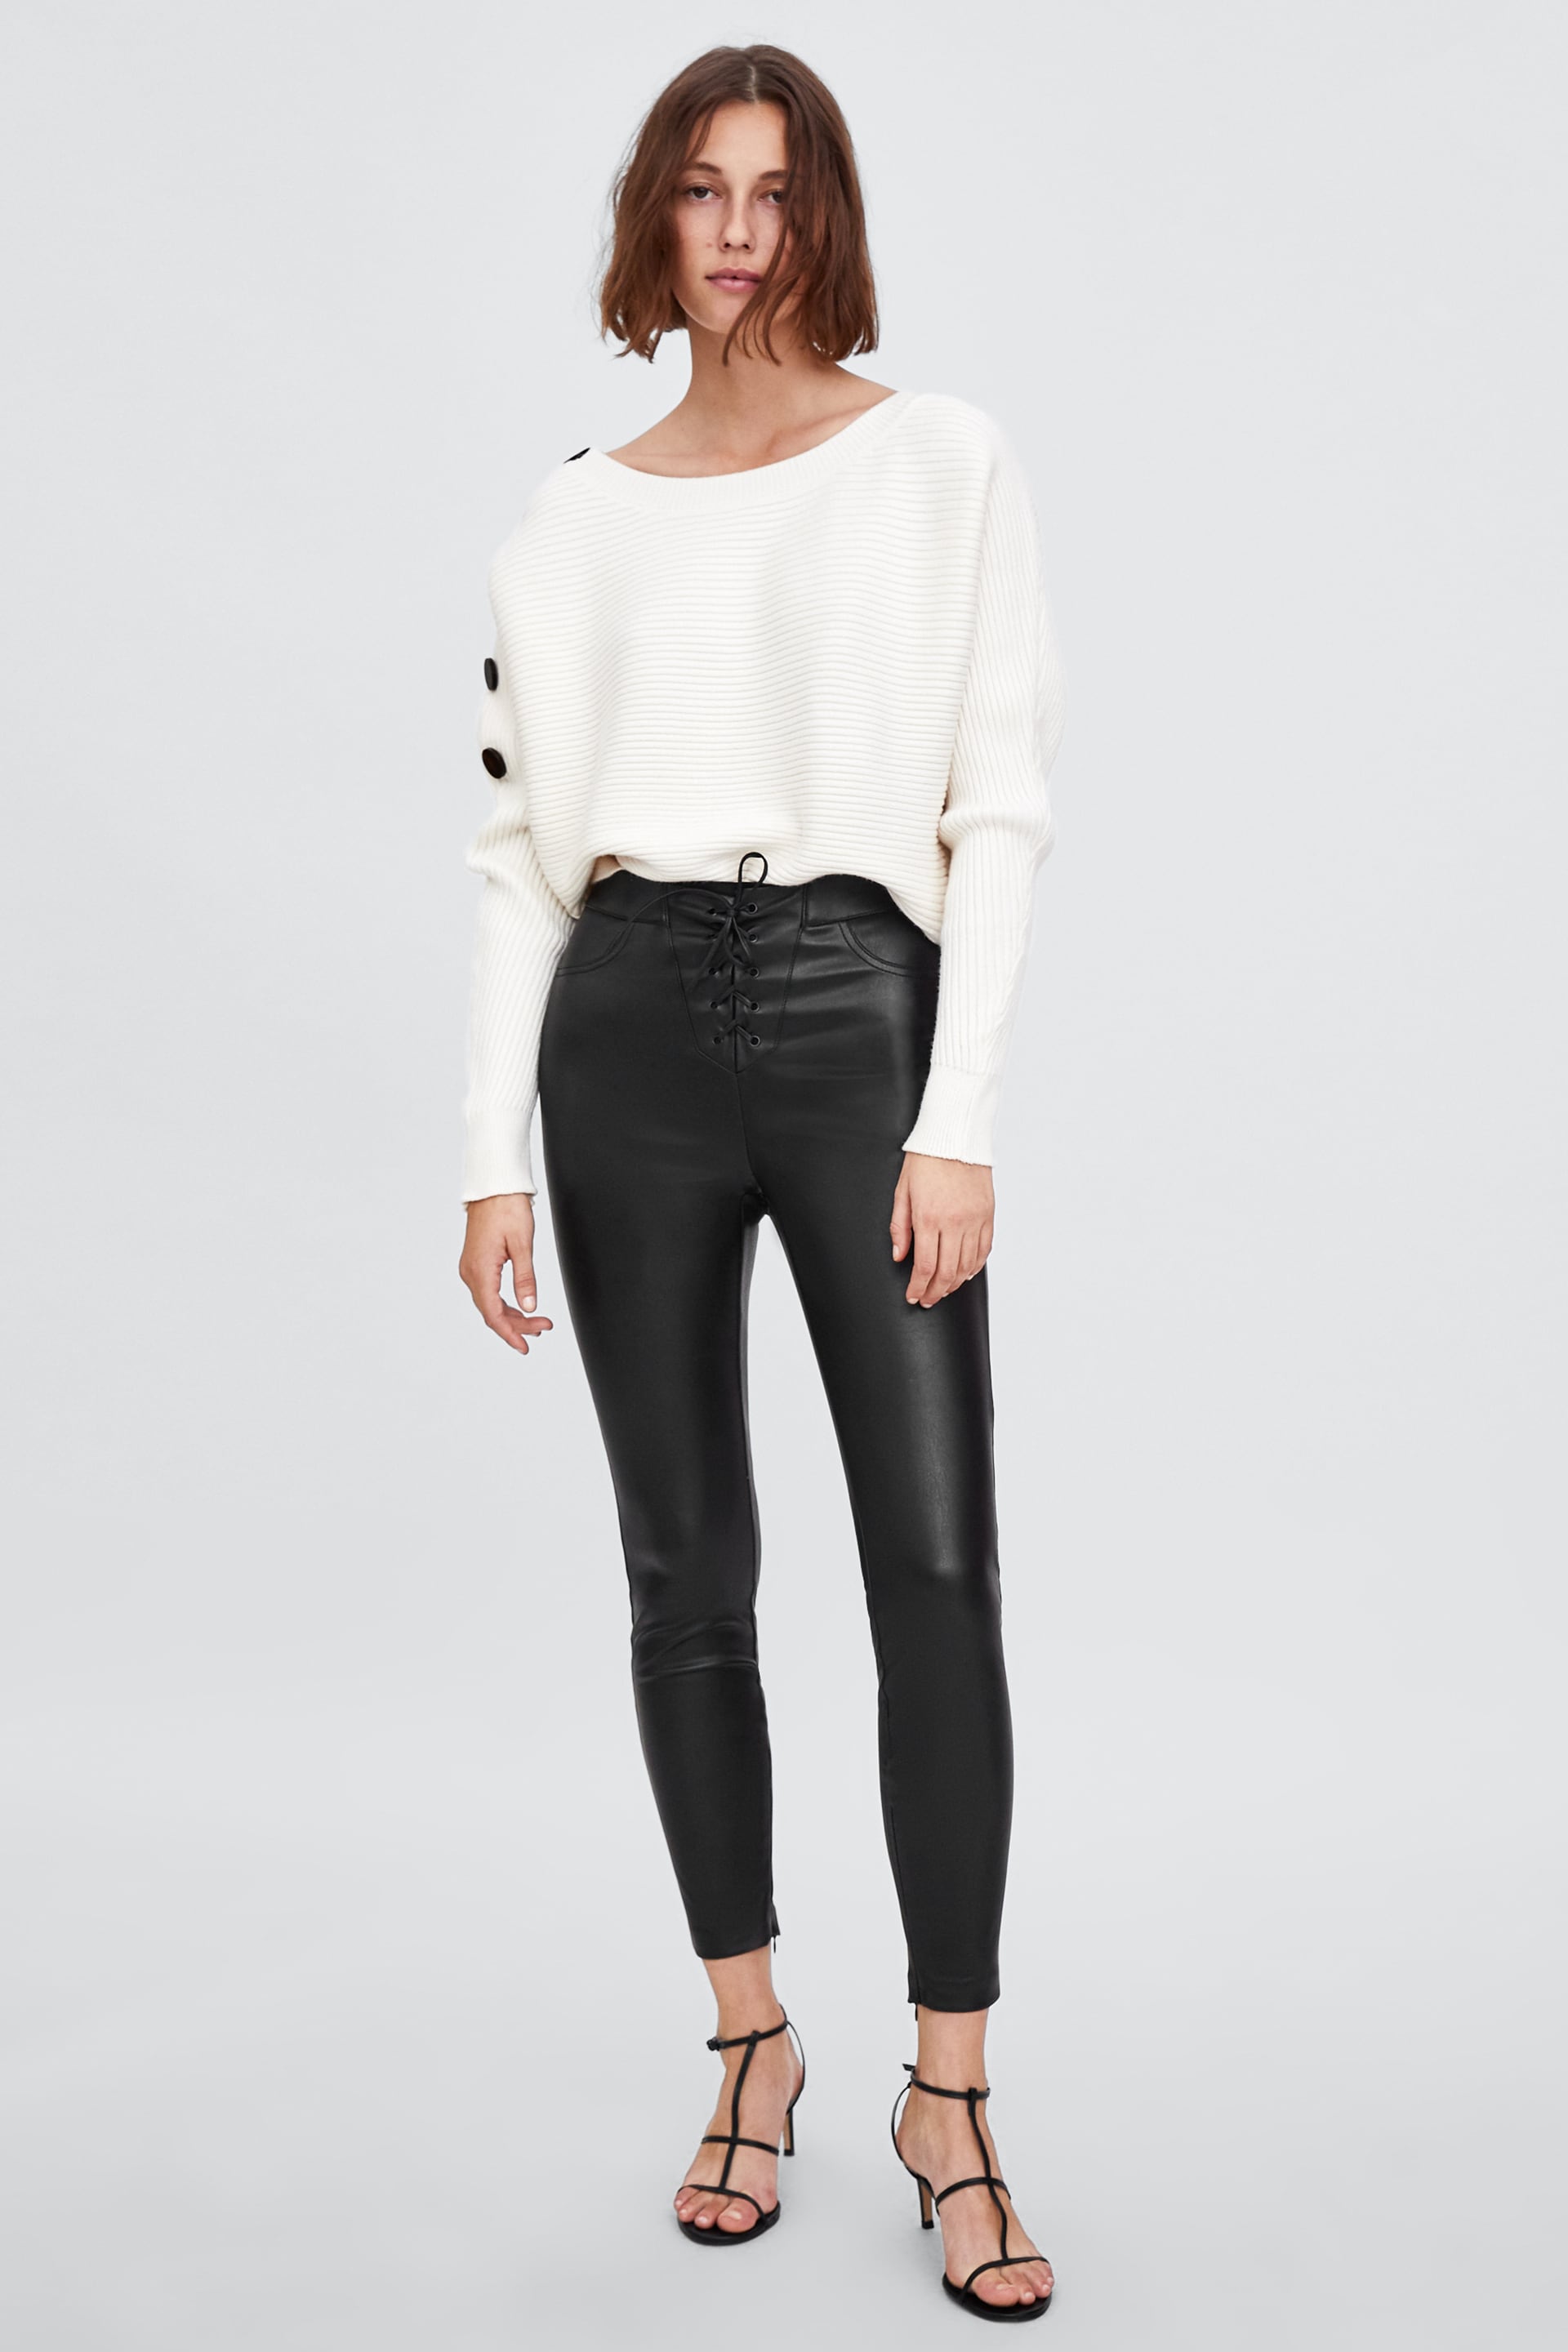 Pantaloni leggings di pelle Zara tendenza inverno 2019